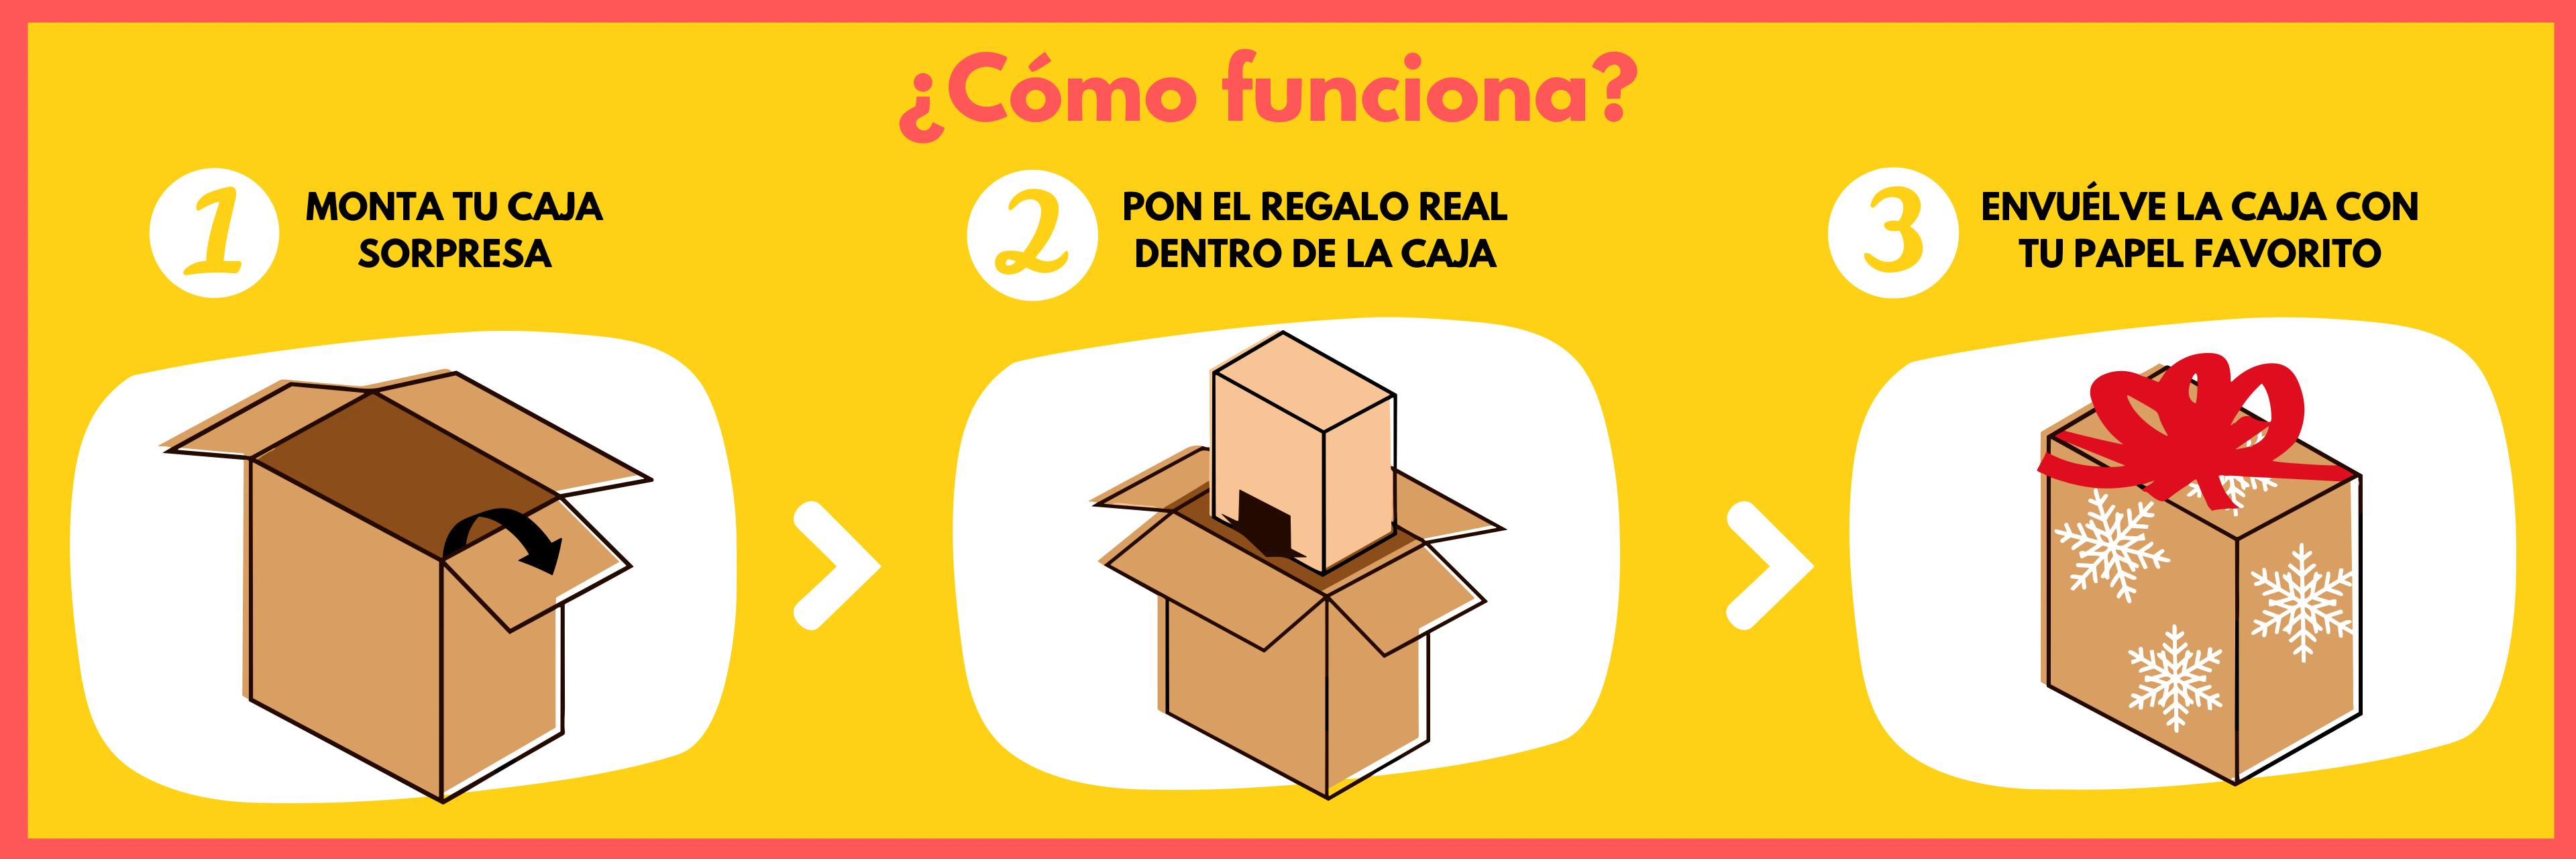 Bromabox_cajas_de_broma (3)_VECTORIZADO.png